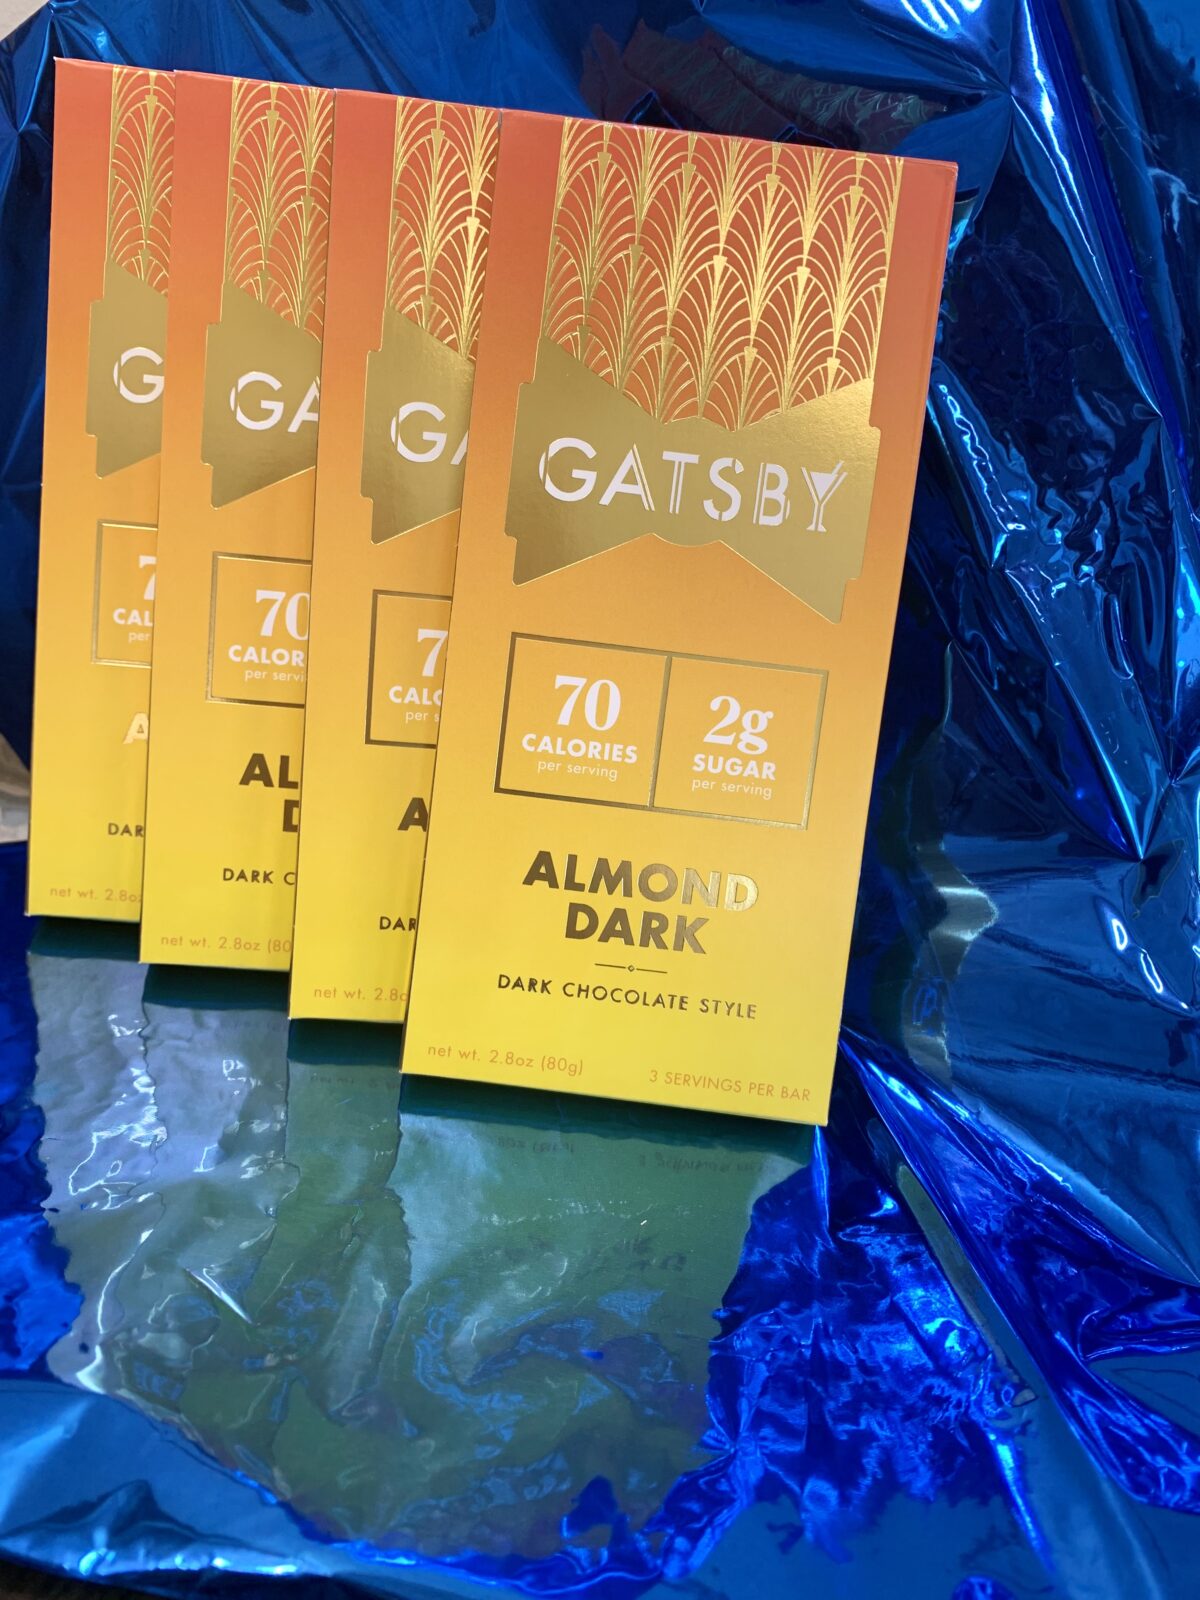 gatsby almond dark chocolate bars against a blue shiny background